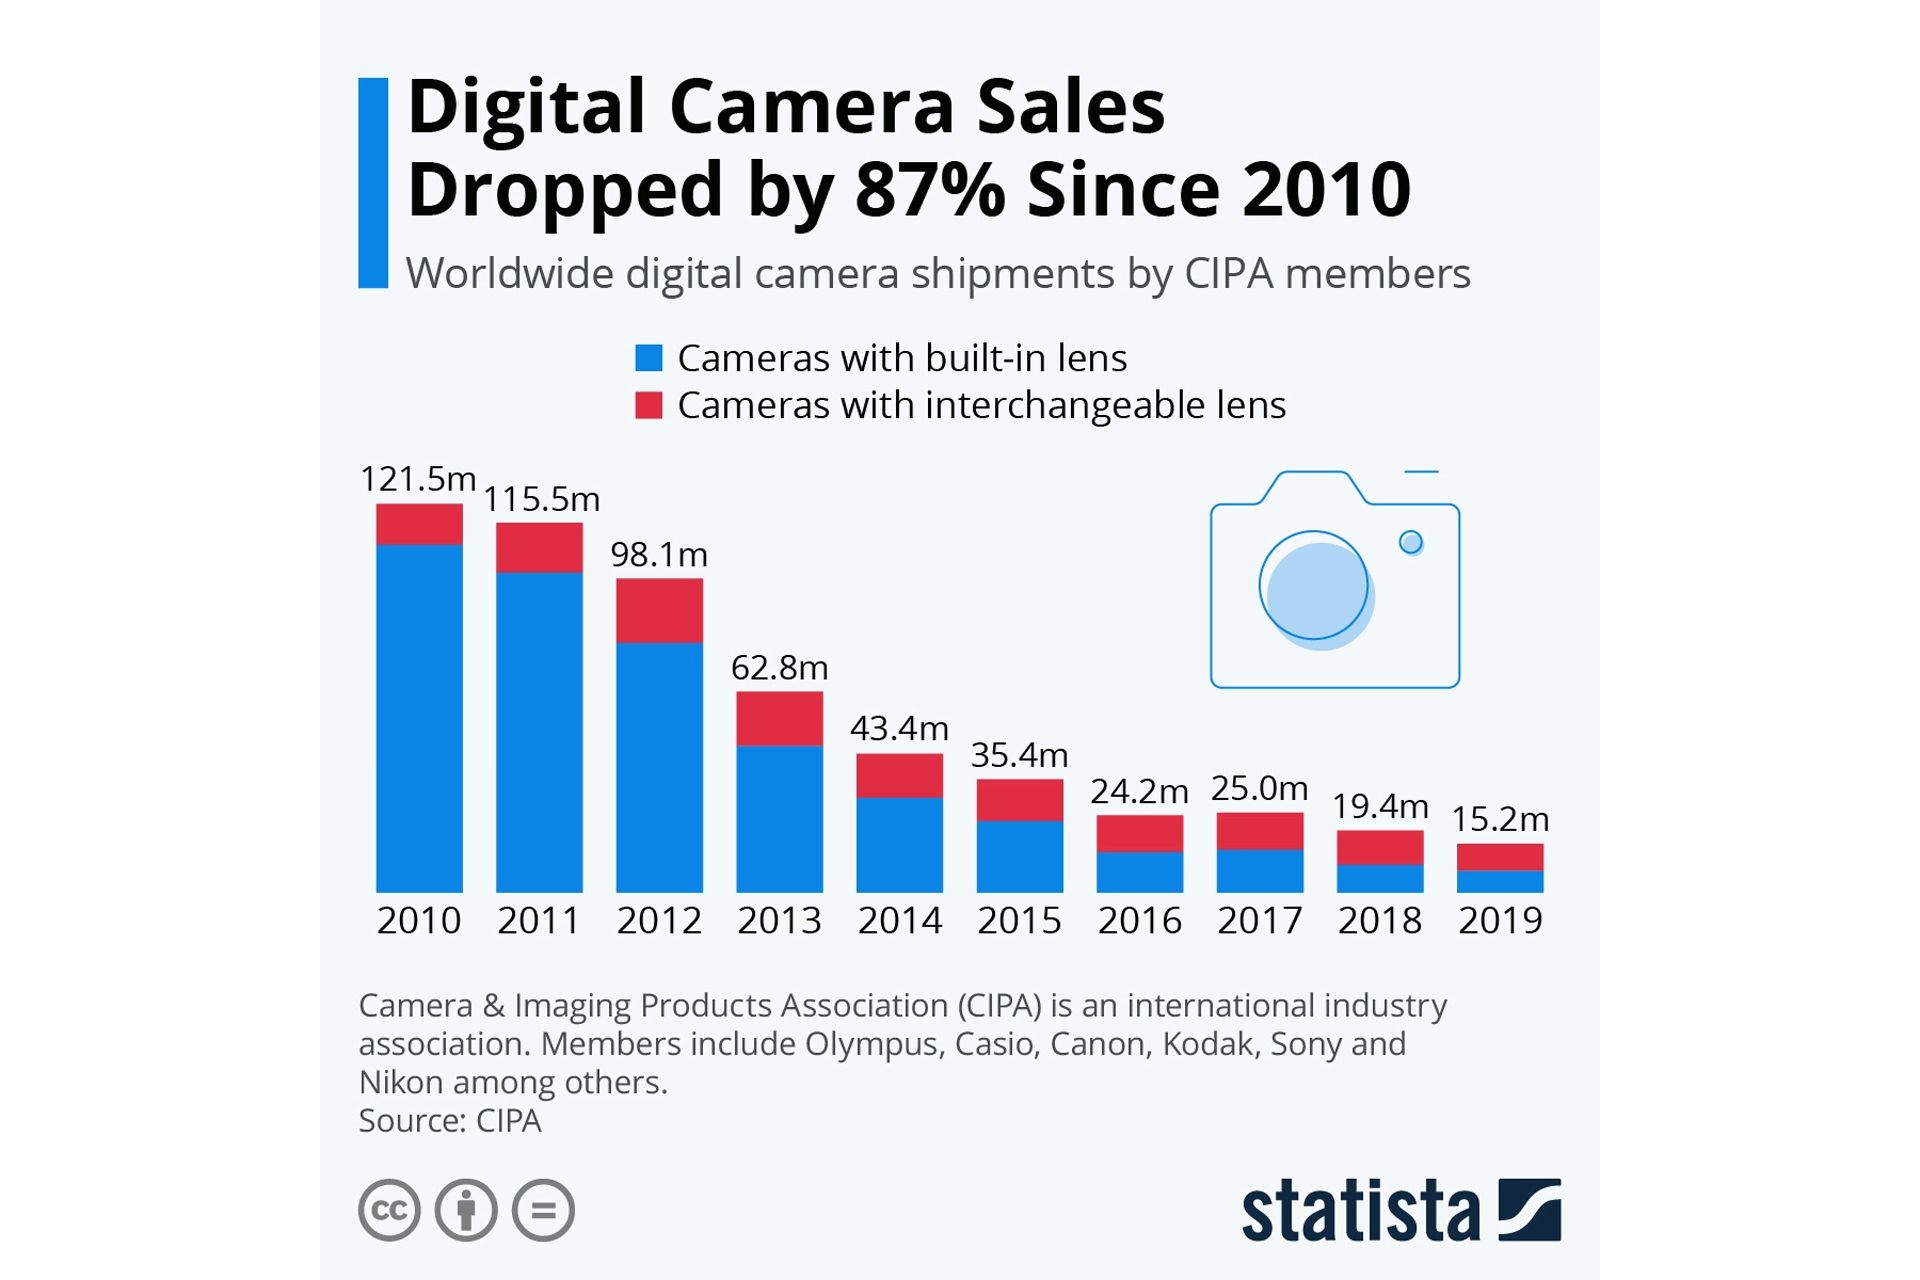 87% drop in digital camera sales in Statista chart statistics